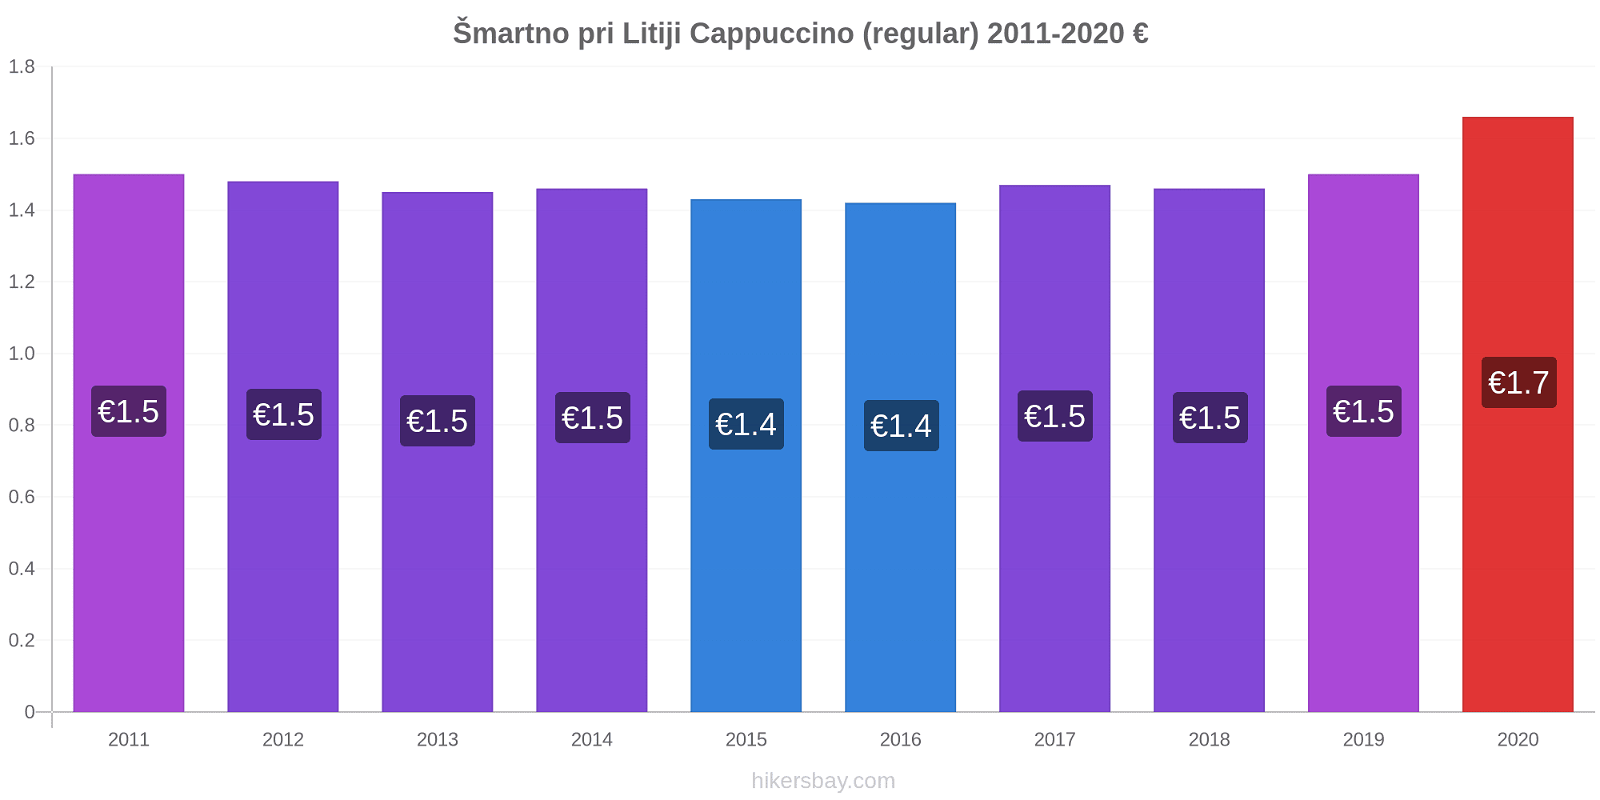 Šmartno pri Litiji price changes Cappuccino (regular) hikersbay.com